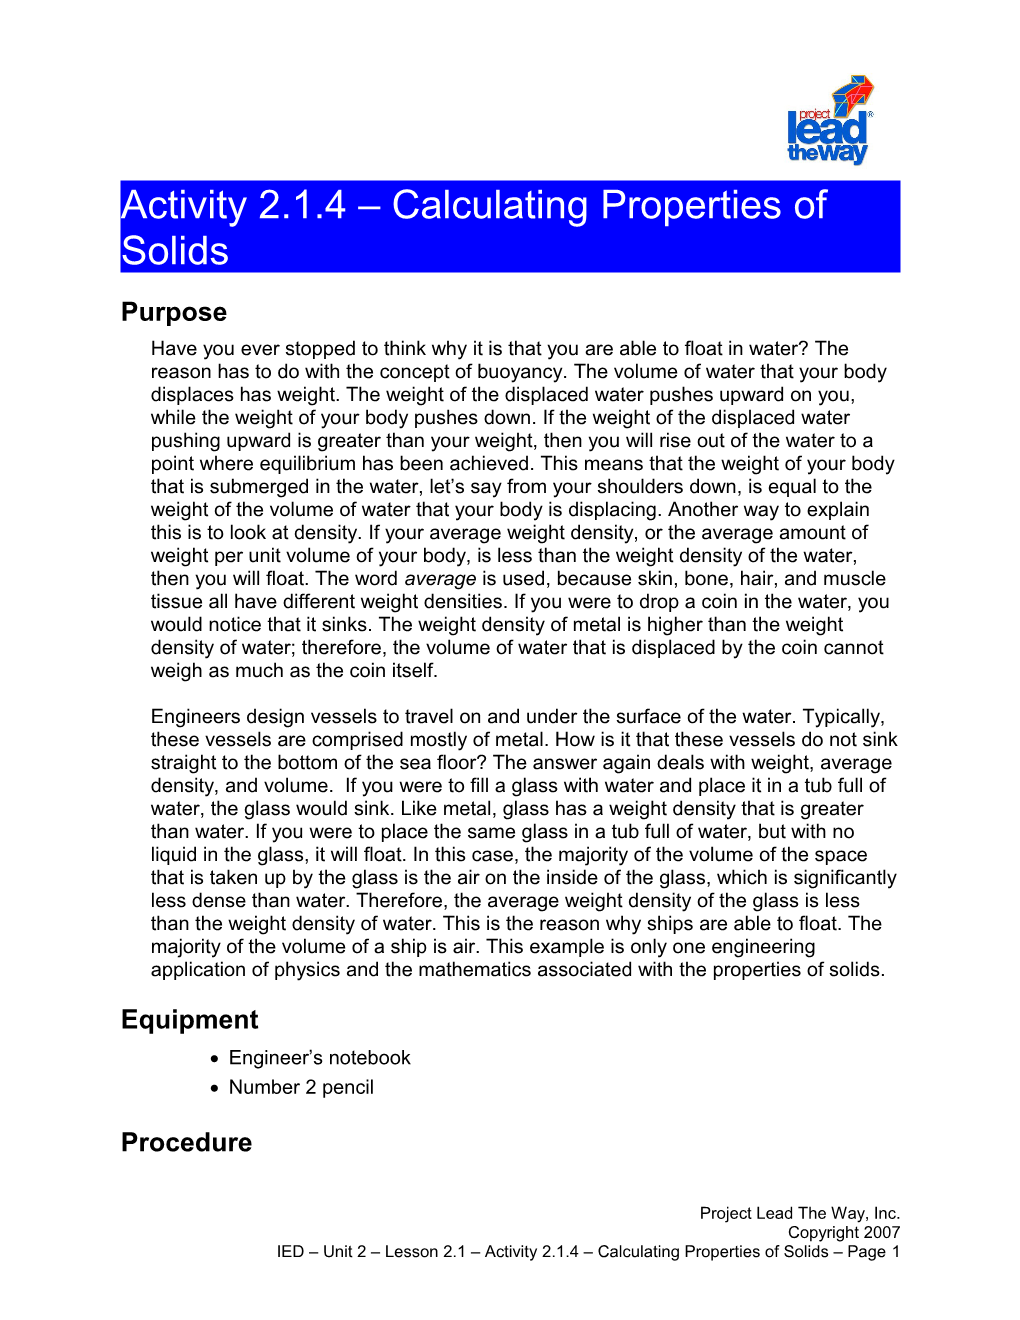 Activity 2.1.4: Calculating Properties of Solids